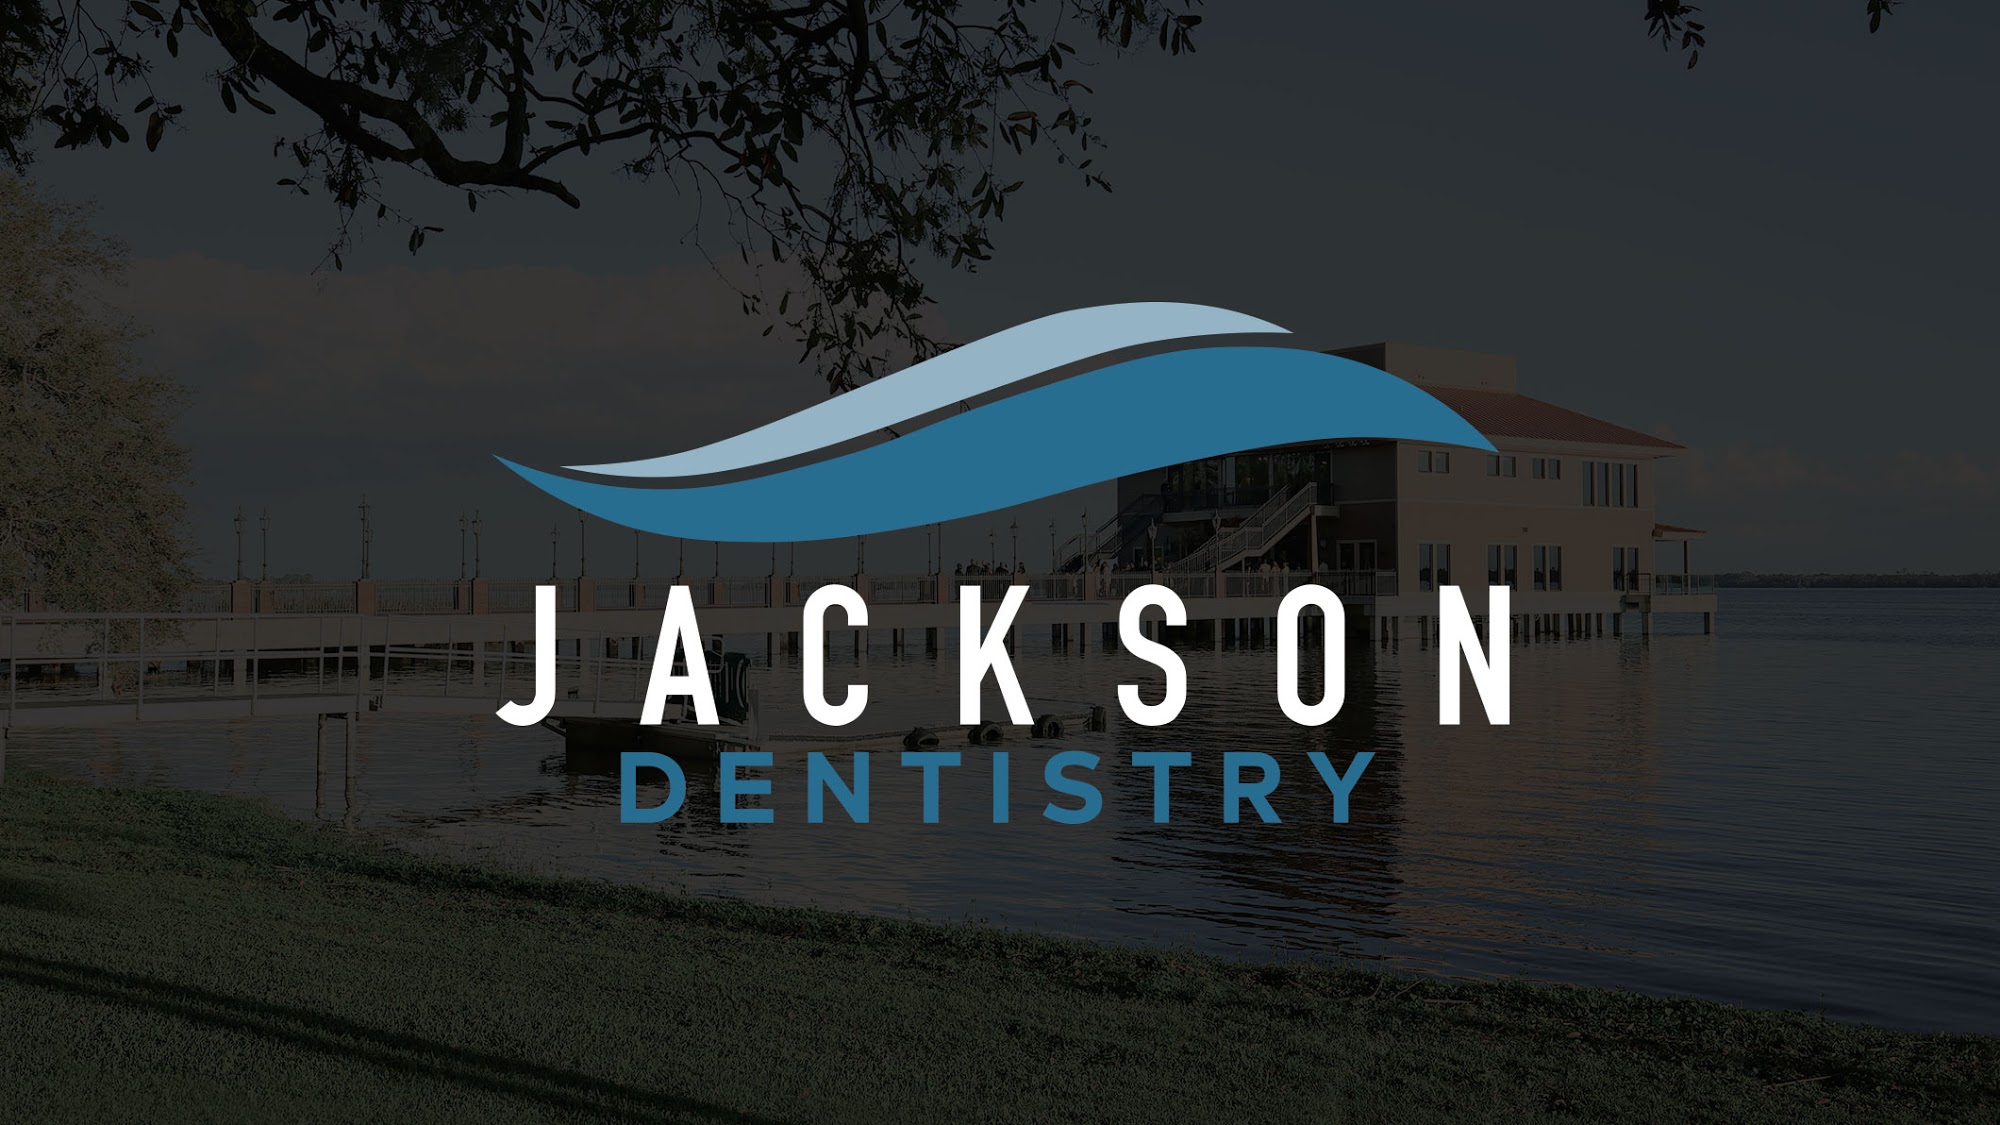 Jackson Dentistry